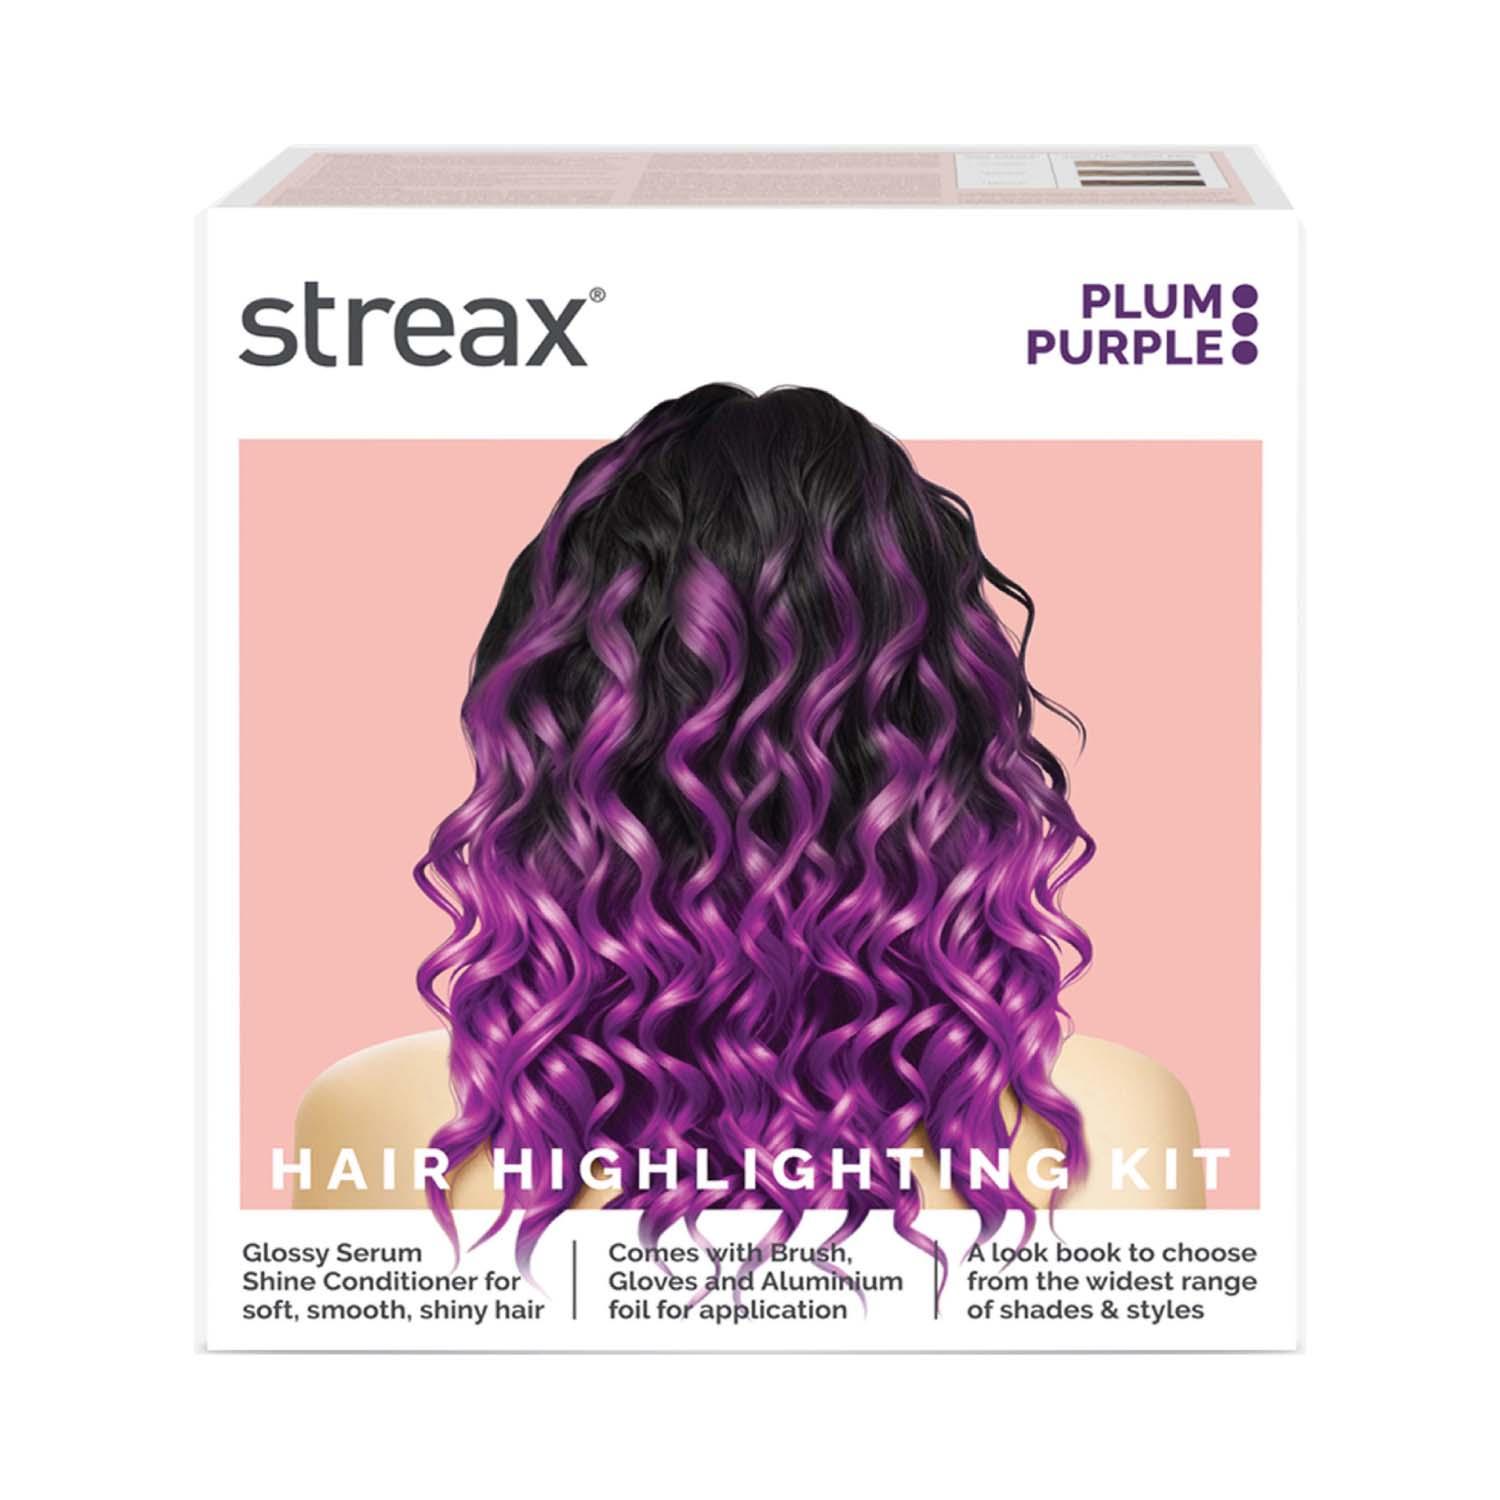 Streax | Streax Ultralights Hair Color Highlight Kit - Plum Purple (180 g)